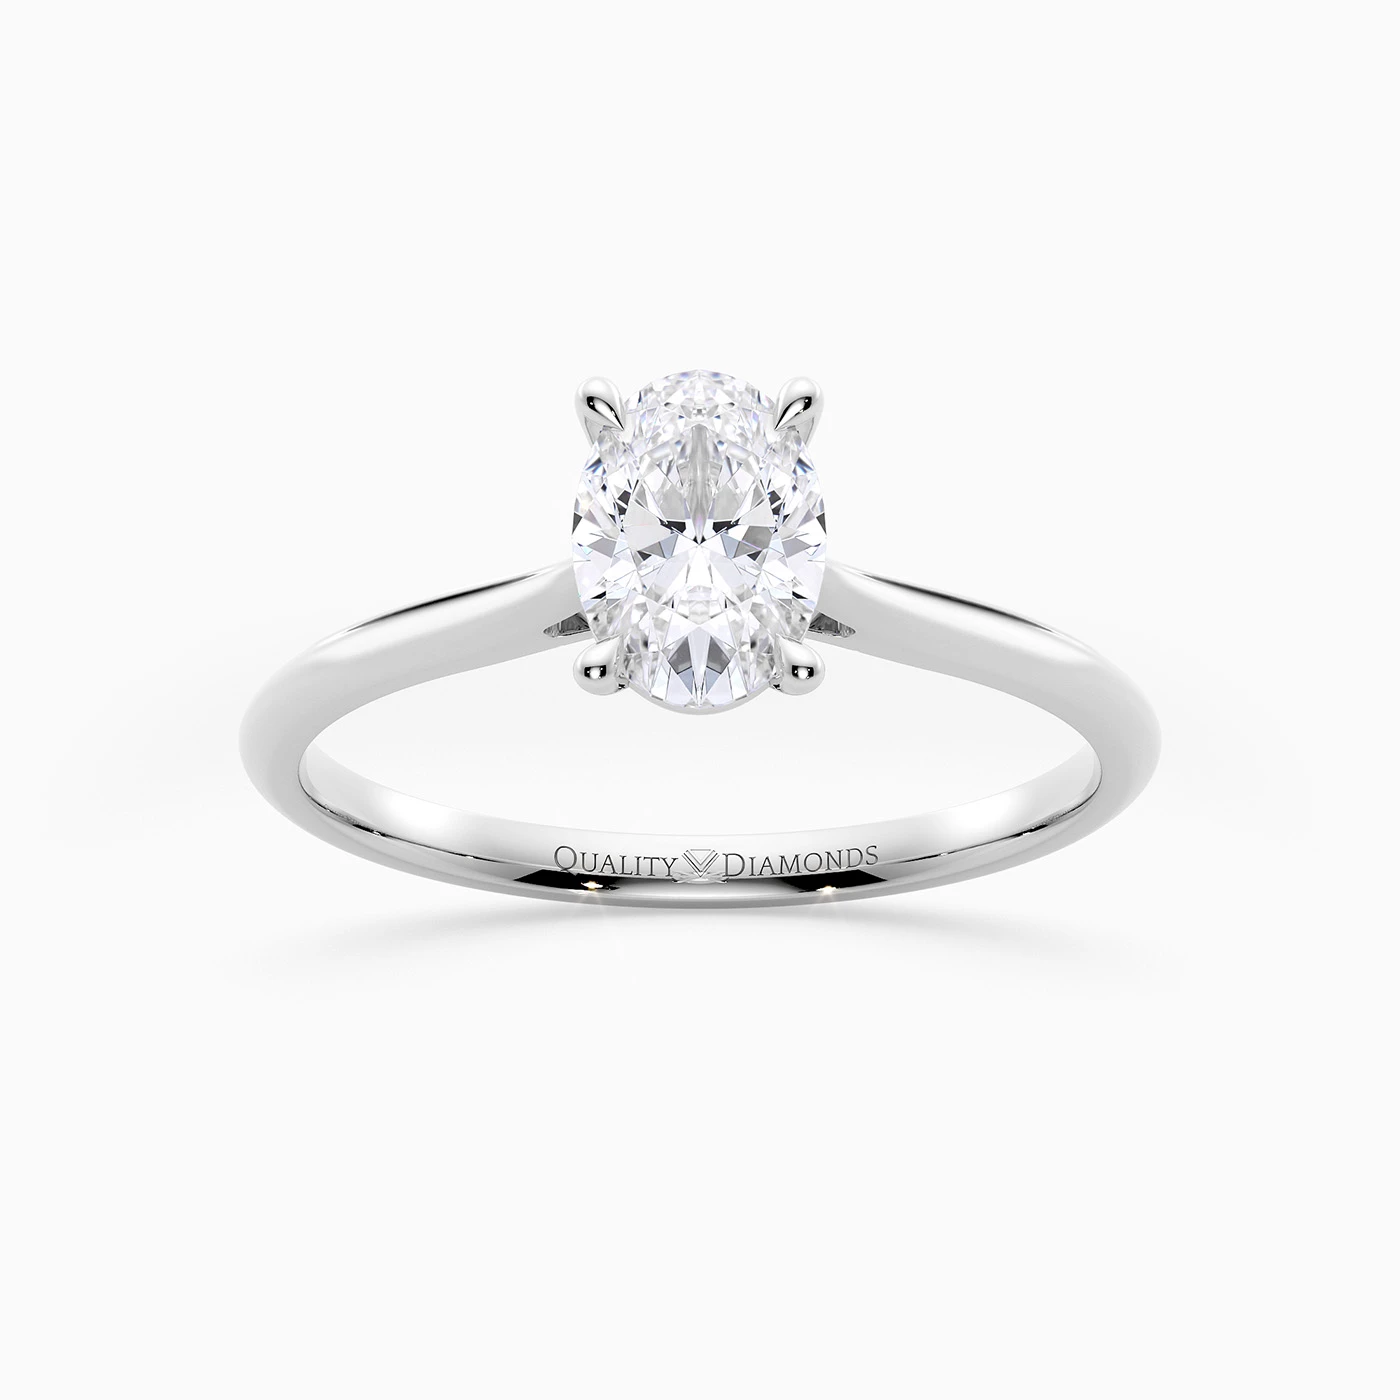 Oval Carys Diamond Ring in 9K White Gold